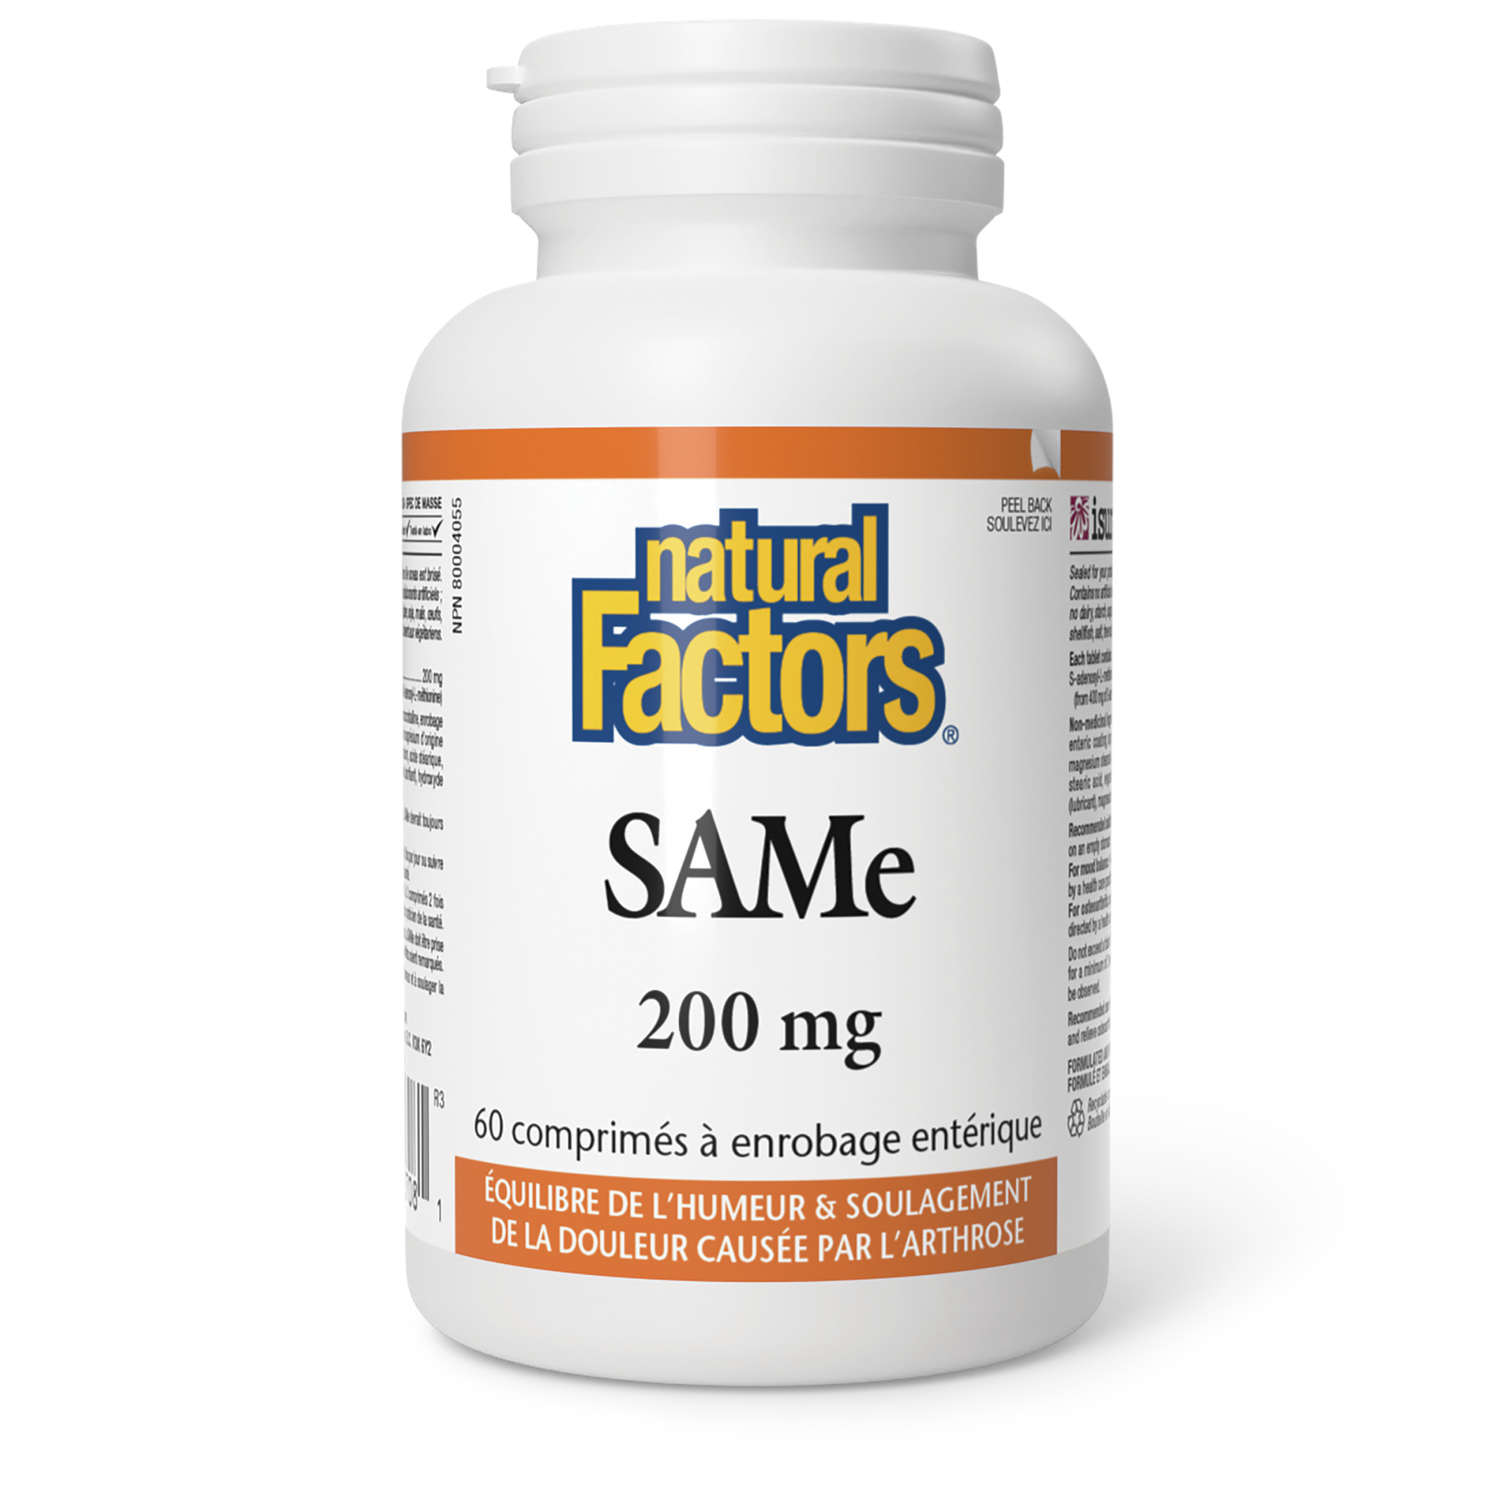 SAMe 200 mg, Natural Factors|v|image|2708